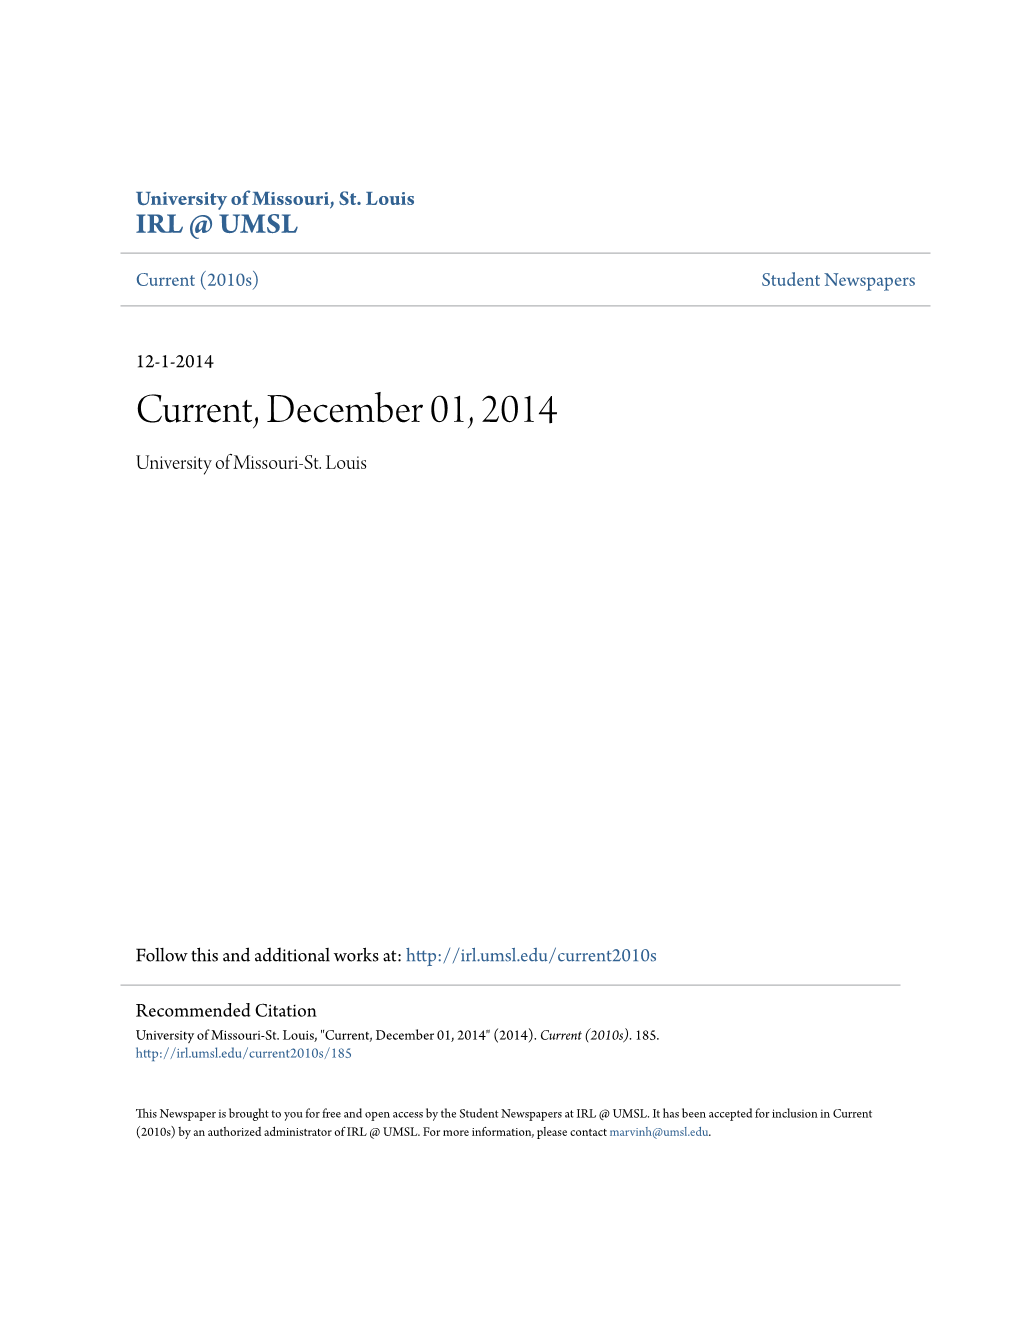 Current, December 01, 2014 University of Missouri-St